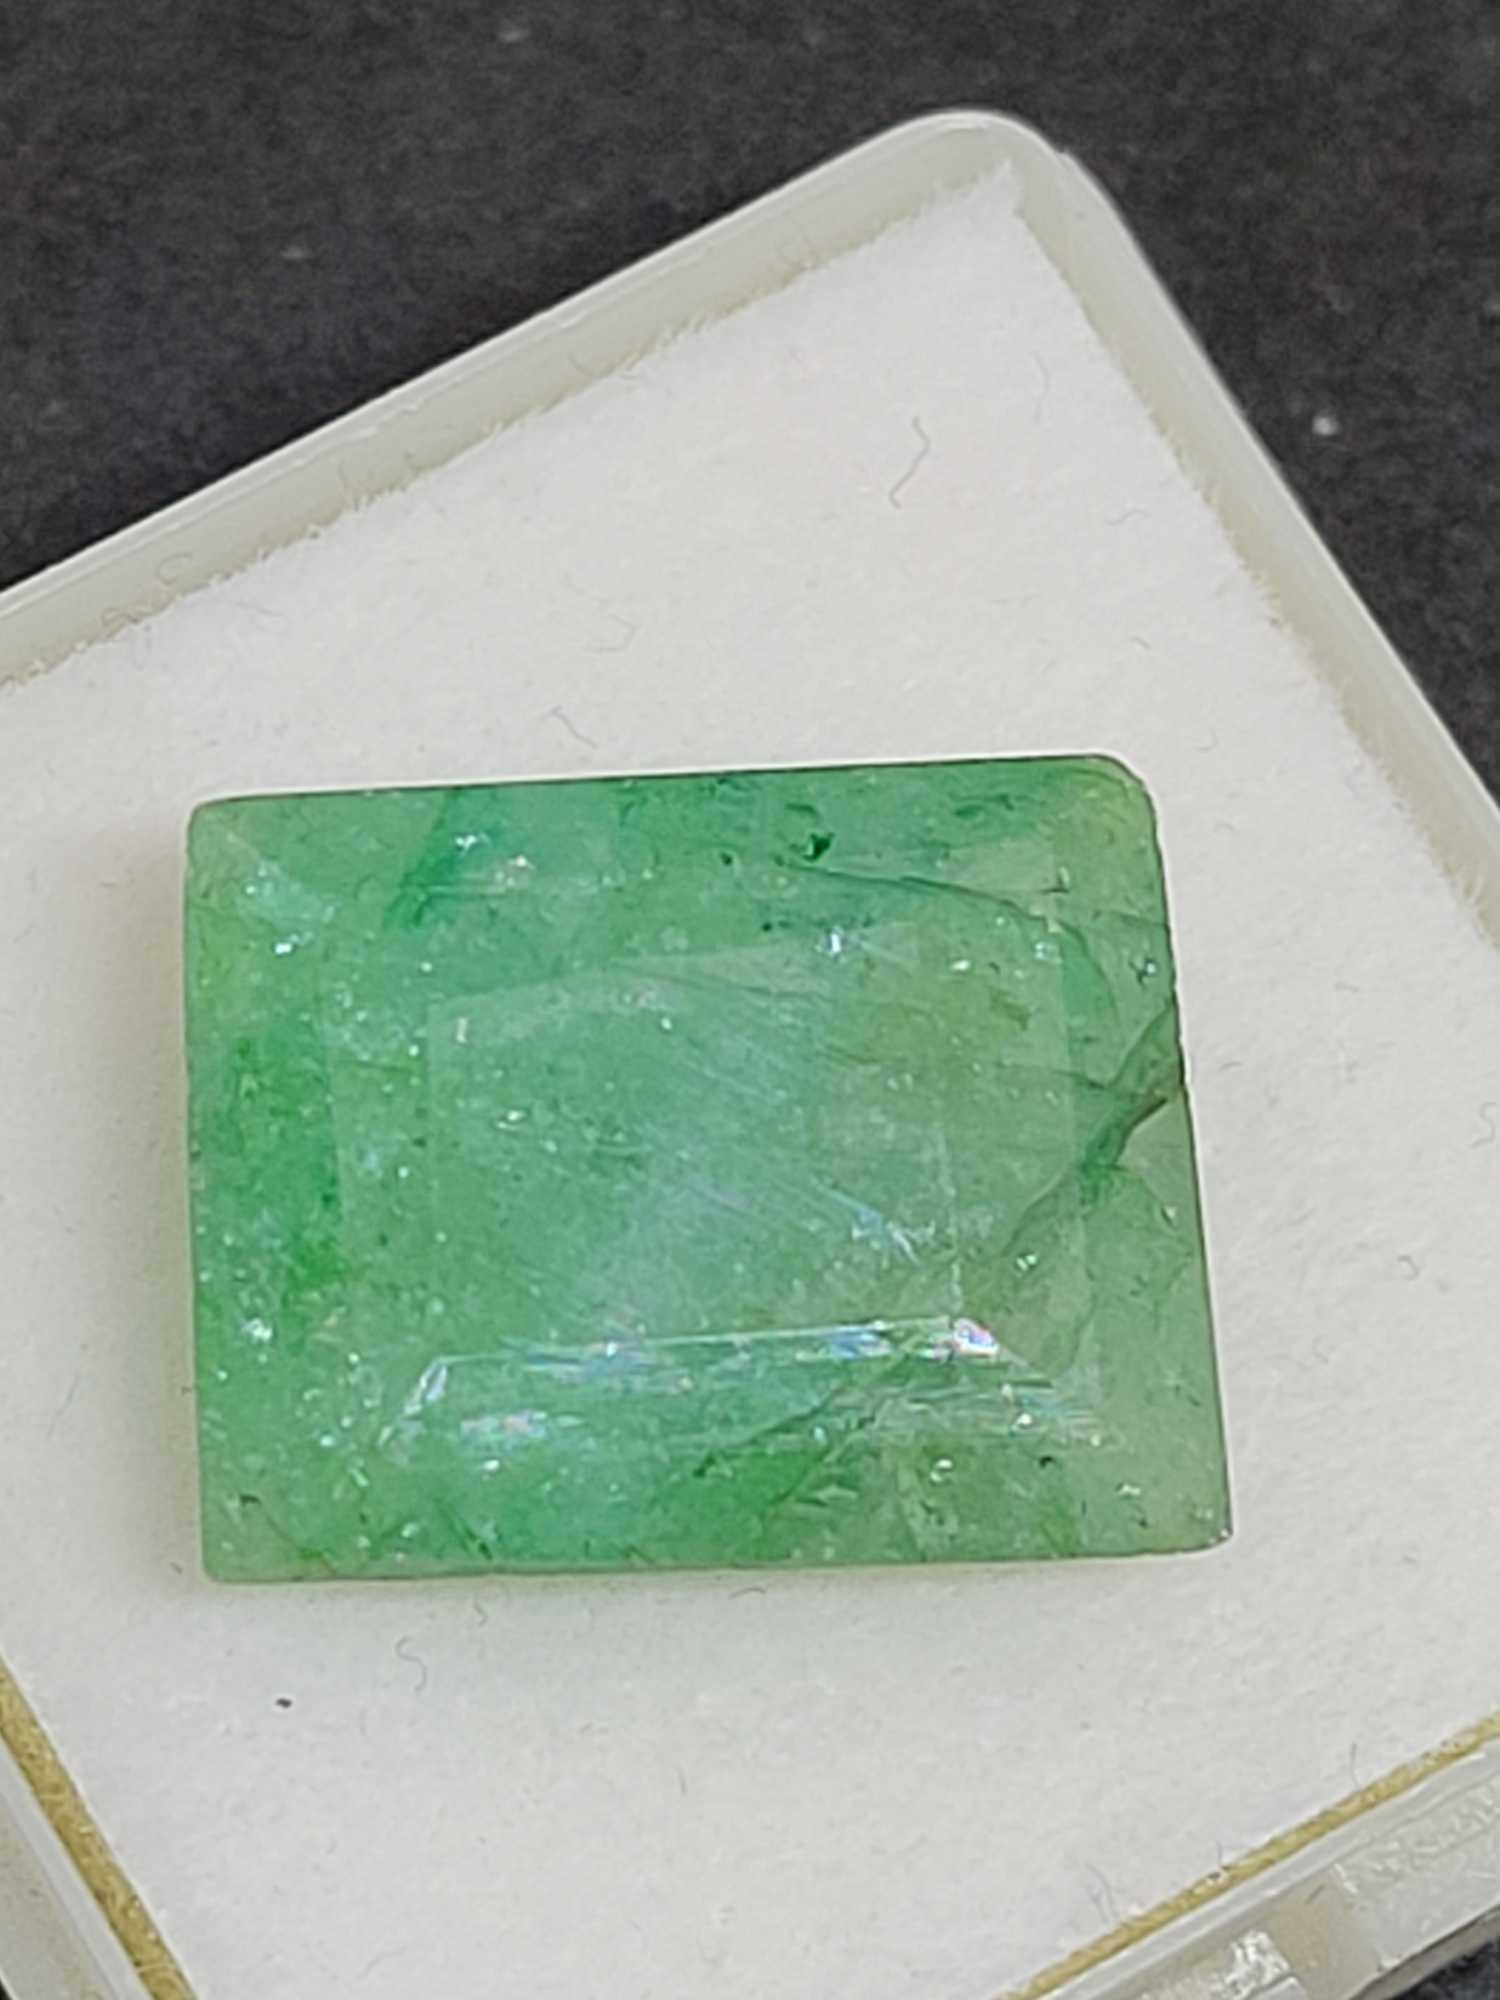 Green Emerald Huge sea green beauty 10.02ct nice earth mind gem